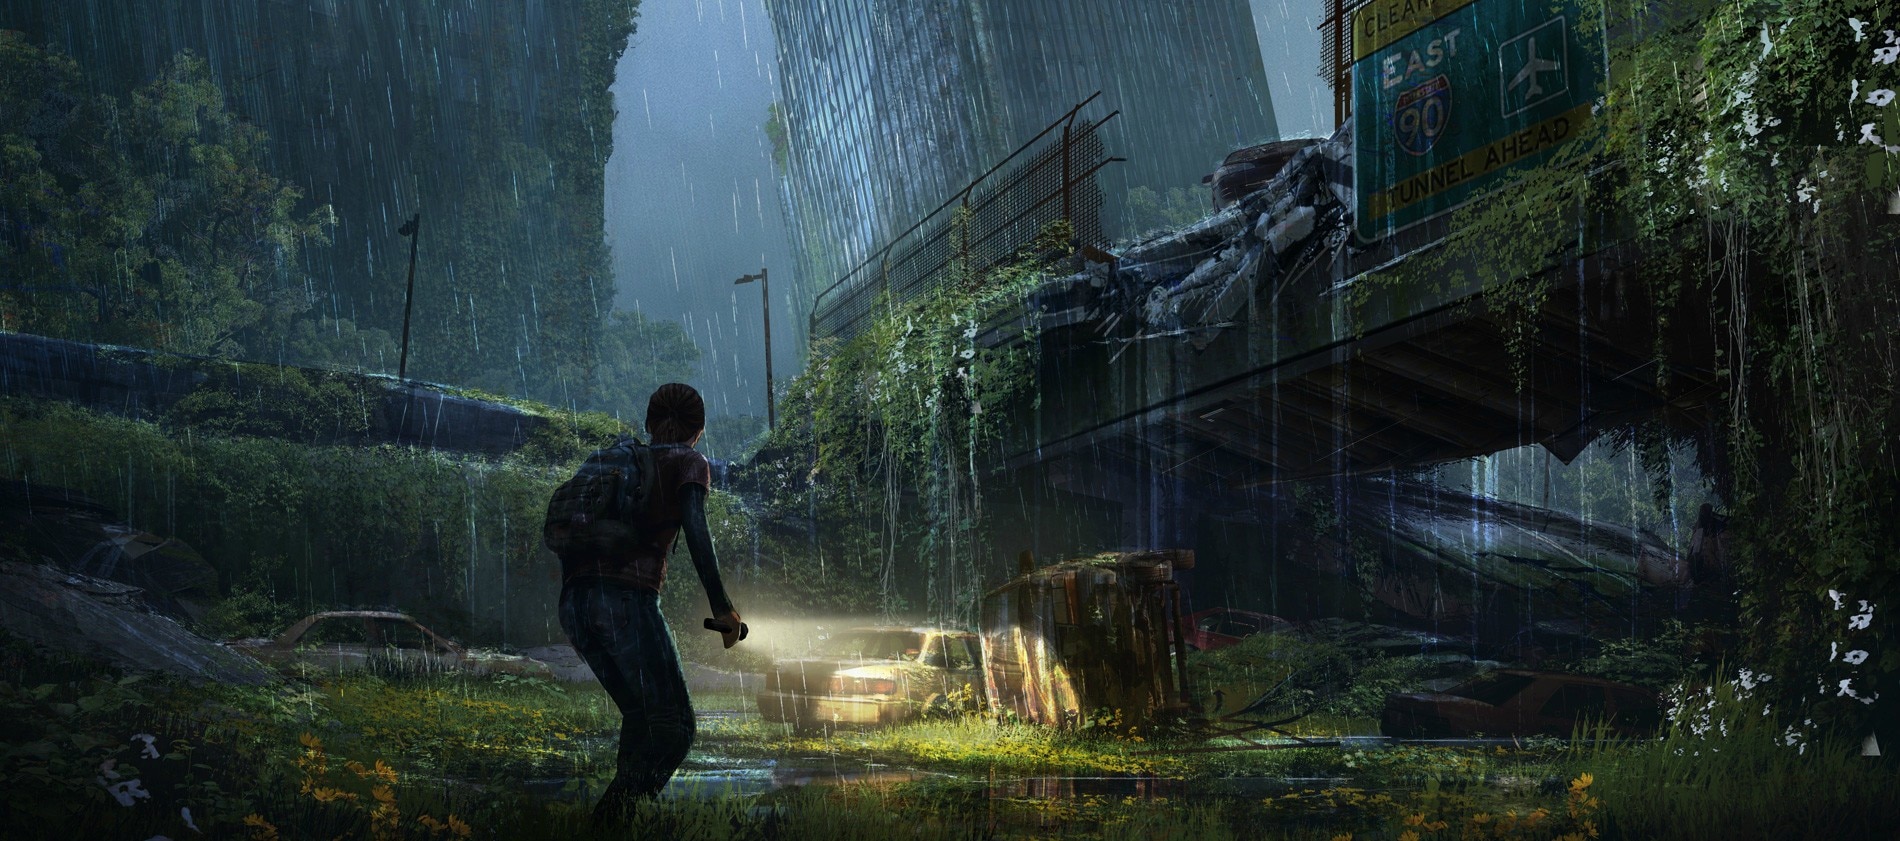 Download Ellie The Last Of Us File HQ PNG Image